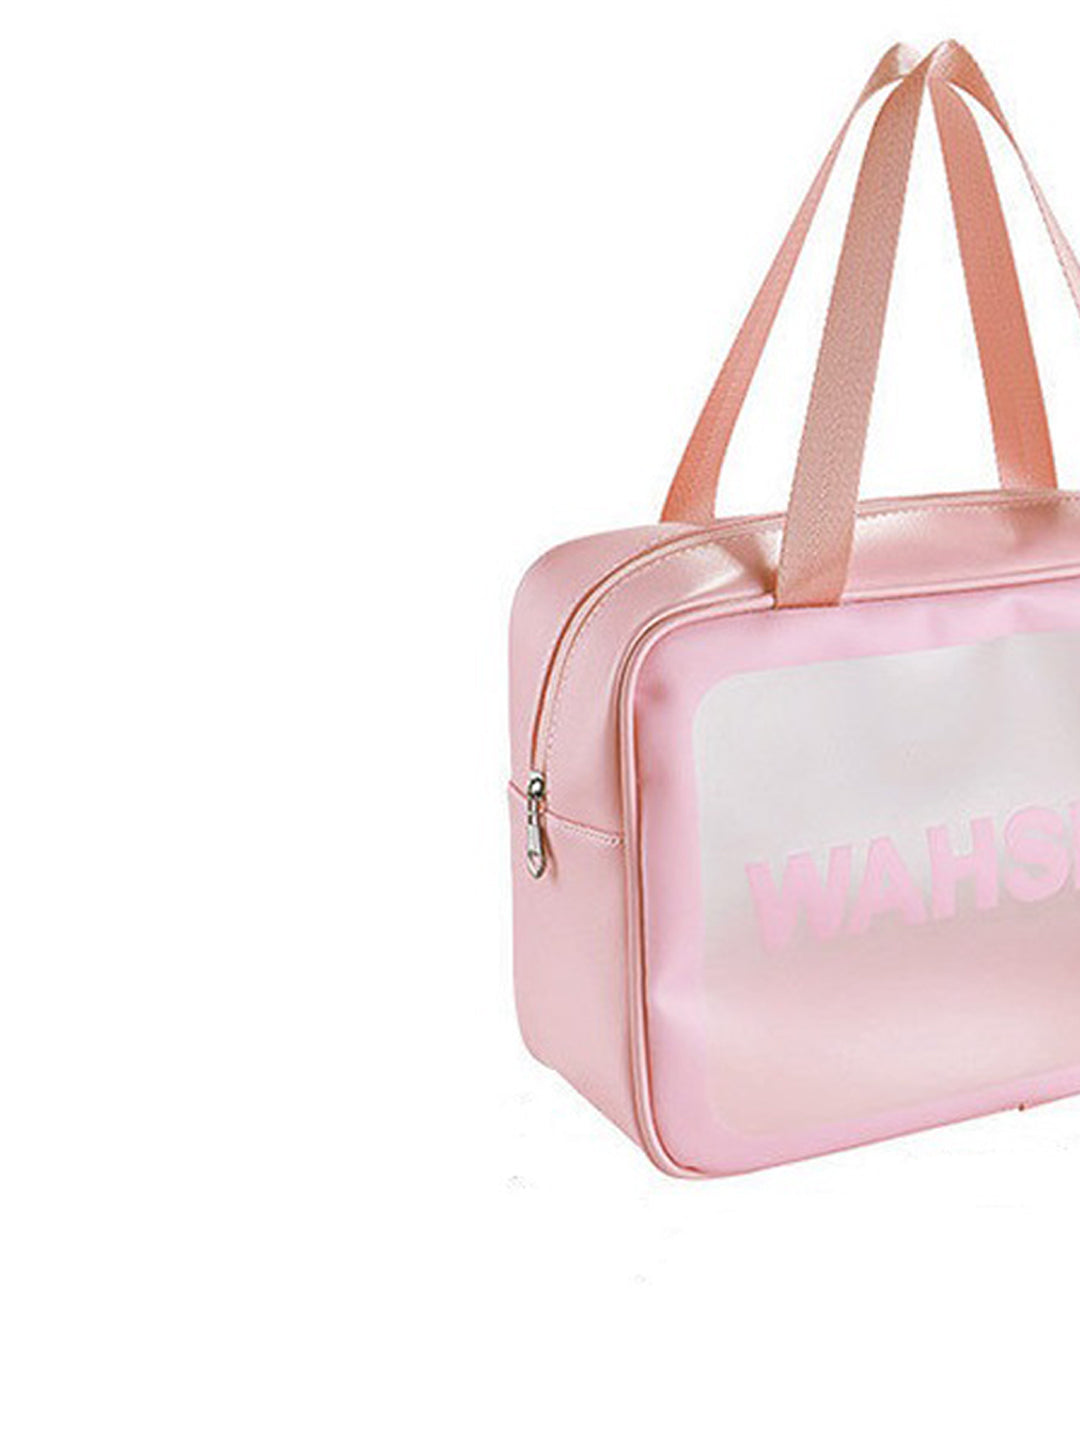 VON CASA Transparent Multicolorpurpose Travel Pouch - Pink